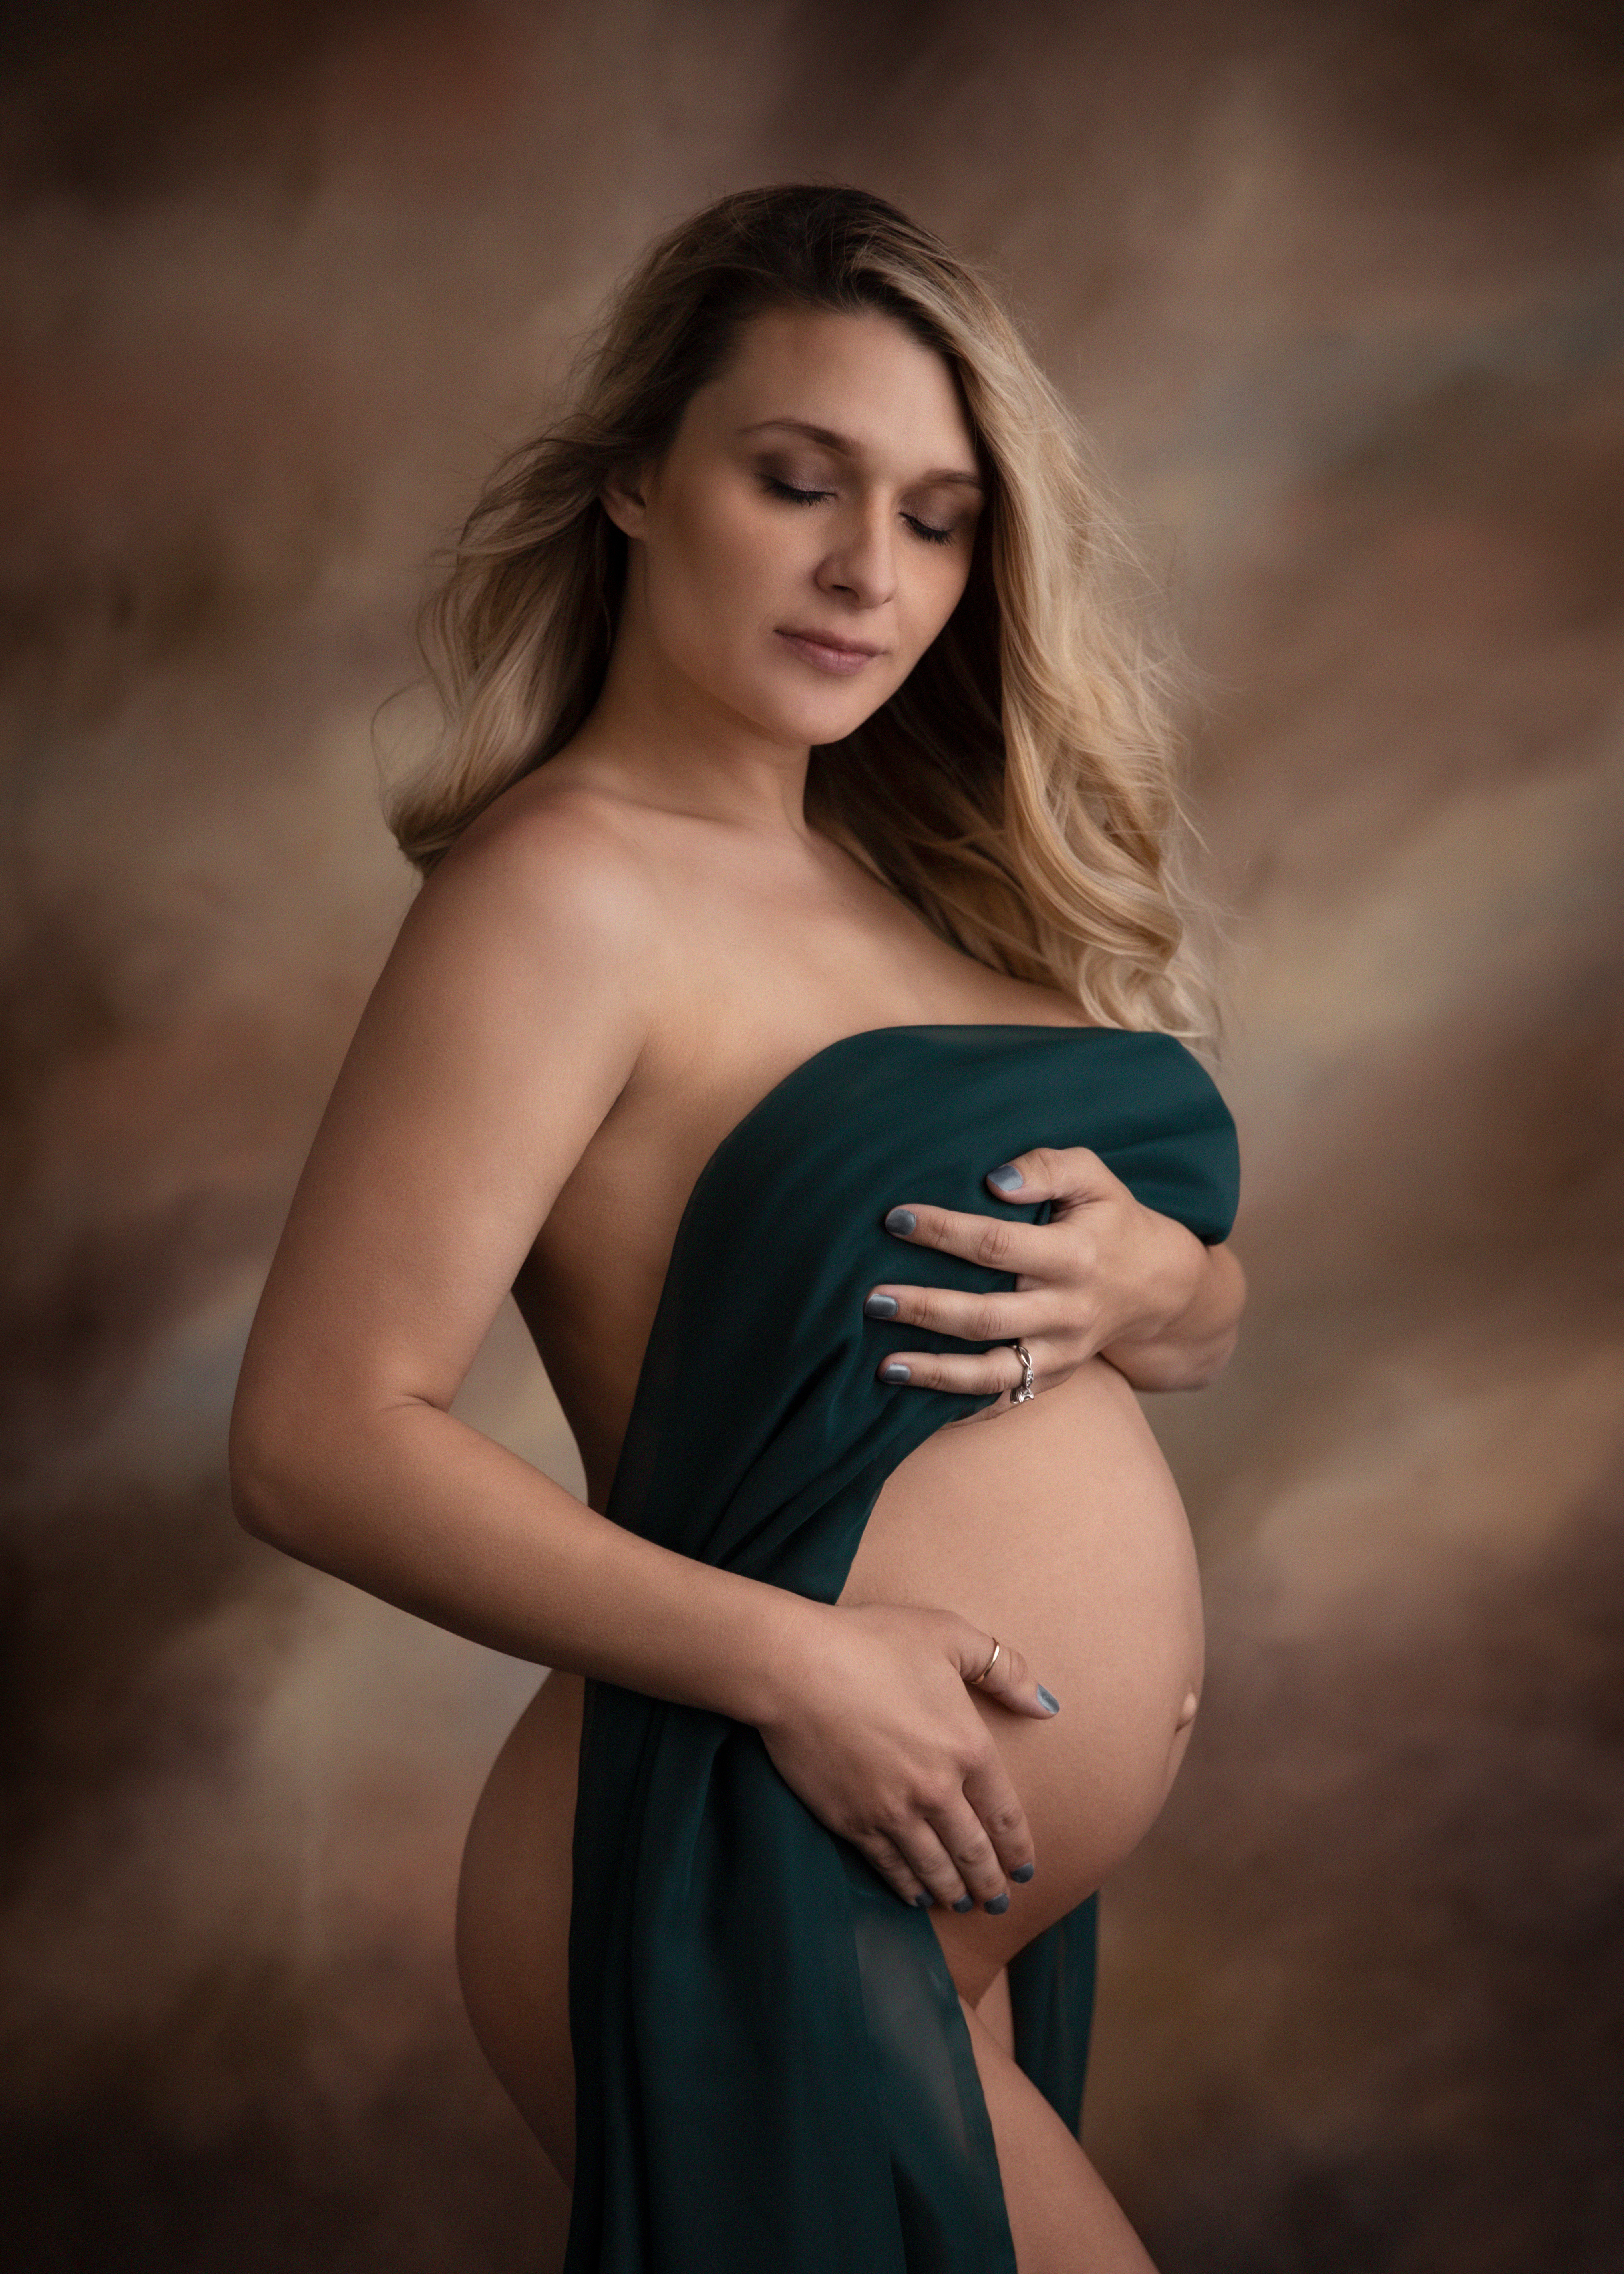 https://feliciasaundersphotography.com/wp-content/uploads/2021/11/Maternity-Photography-Newborn-Photography-Boudoir-Photography-Las-Vegas-Henderson-Family-Portrait-111-[0-9].jpg